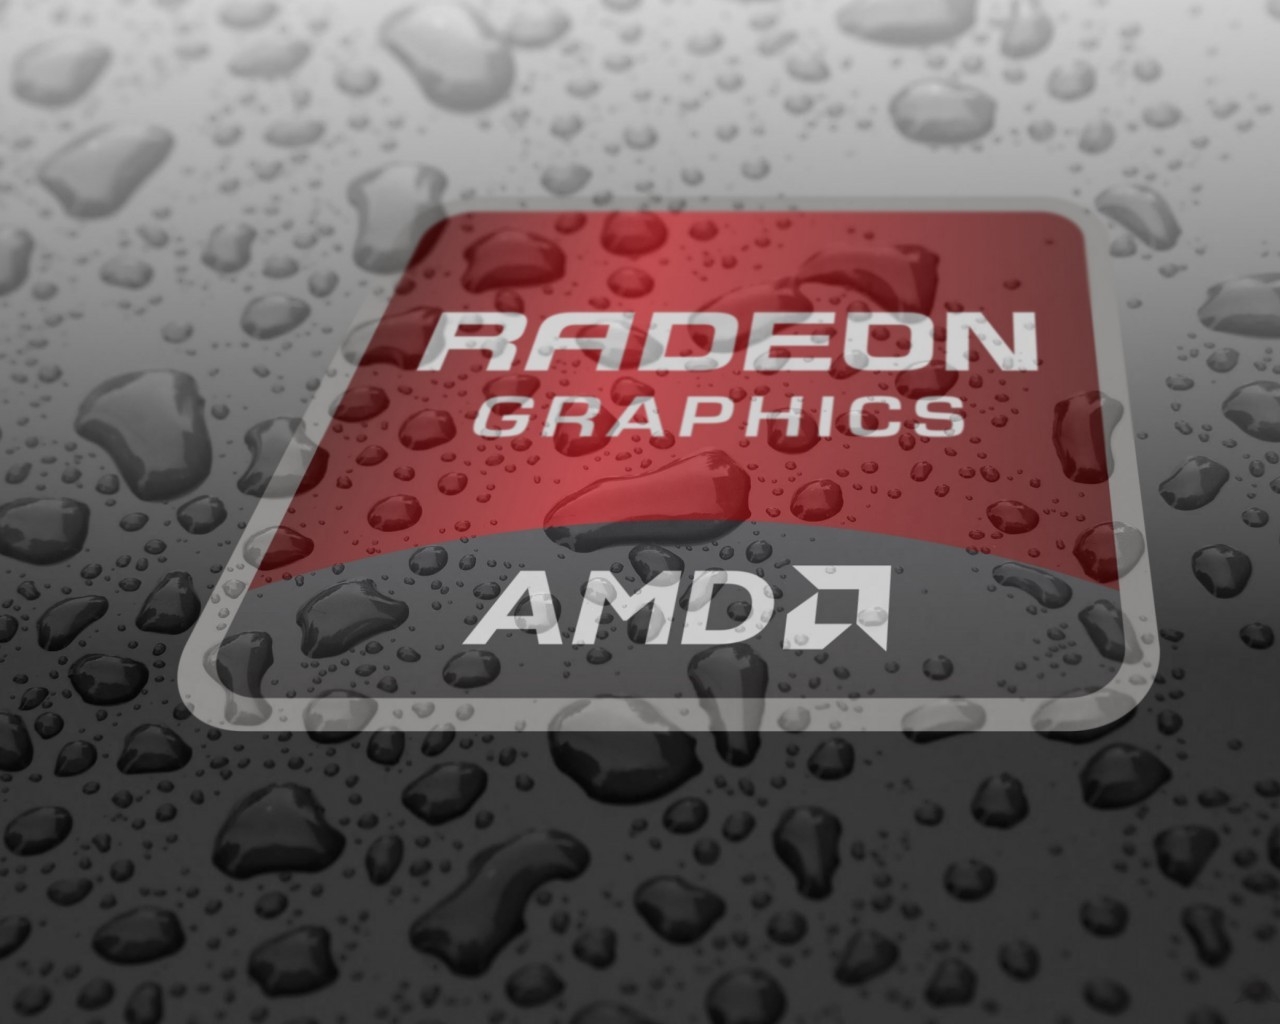 Radeon Graphics AMD for 1280 x 1024 resolution